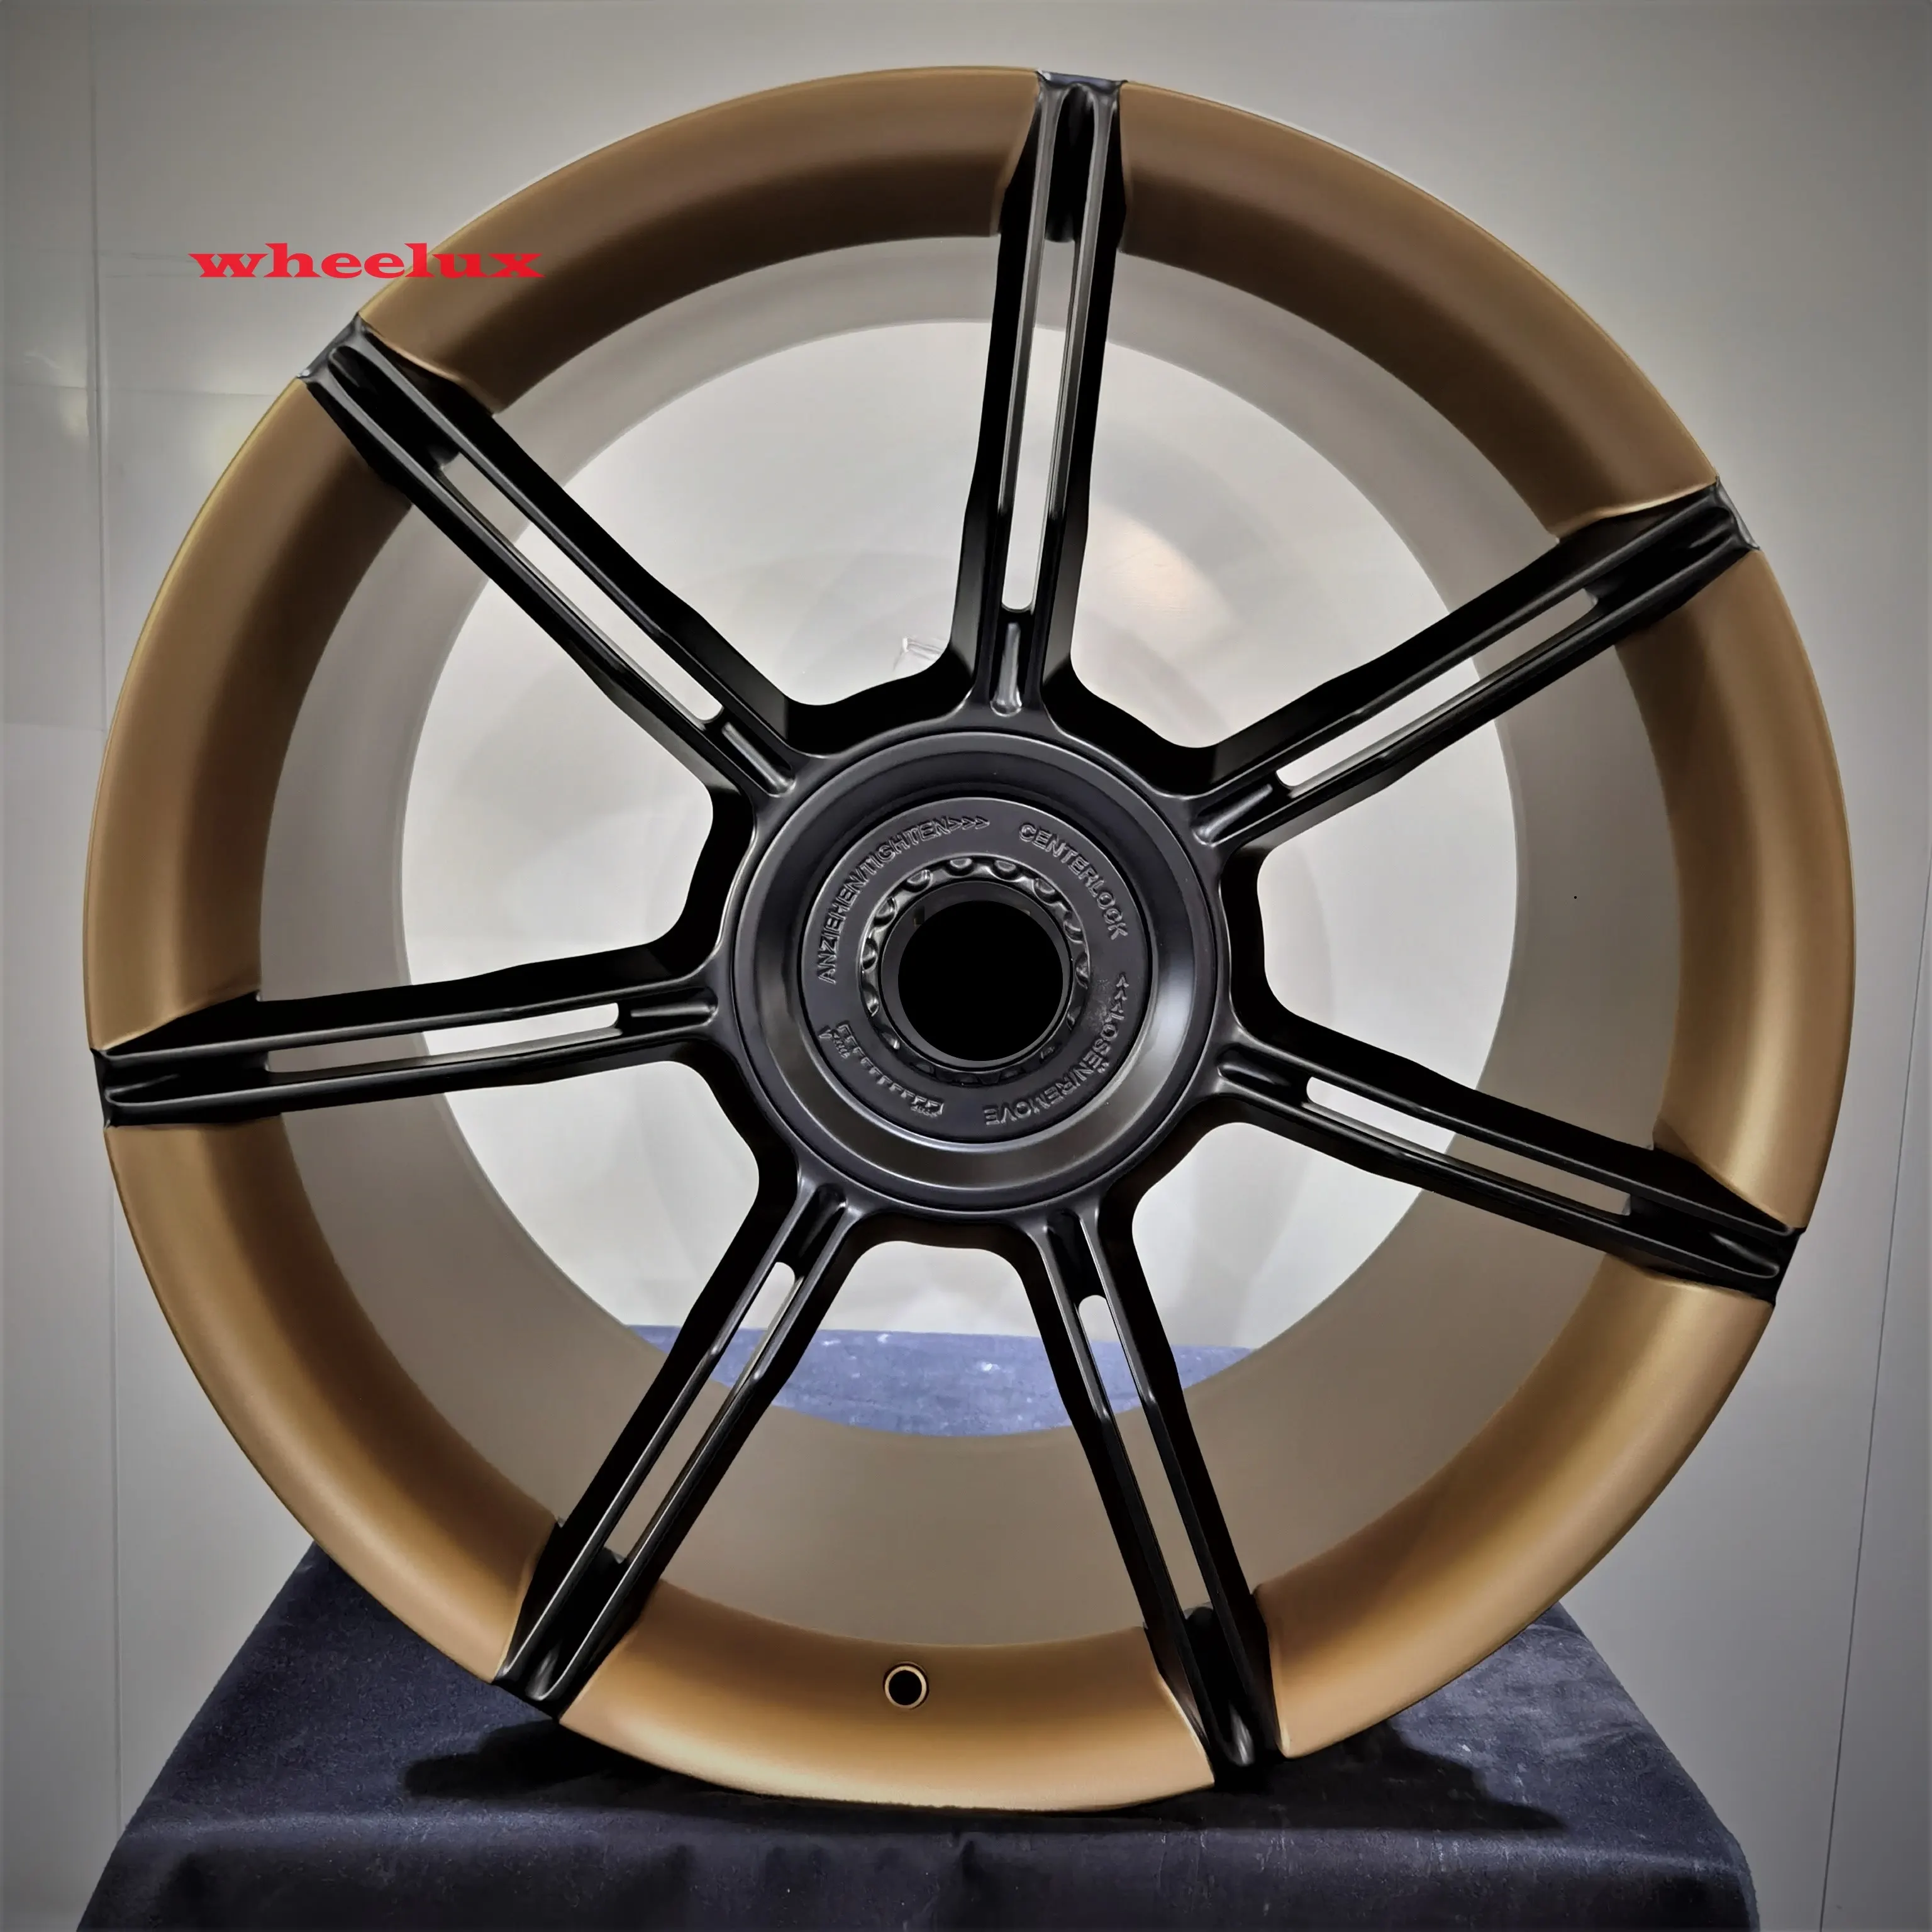 Monoblock black and gold alloy forged wheels 5x130 5x114.3 passenger car wheels rims for porsche taycan turbo tesla model 3 y s